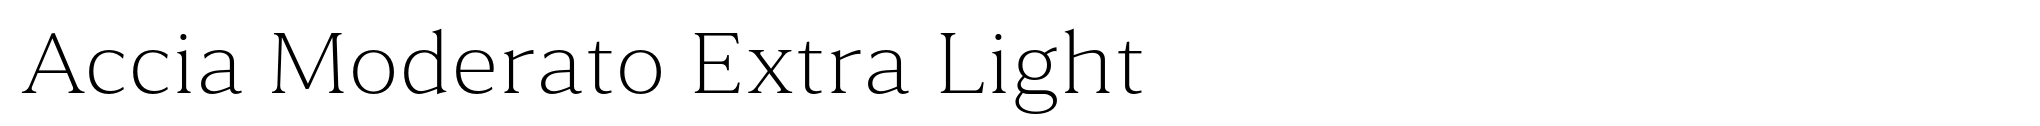 Accia Moderato Extra Light image